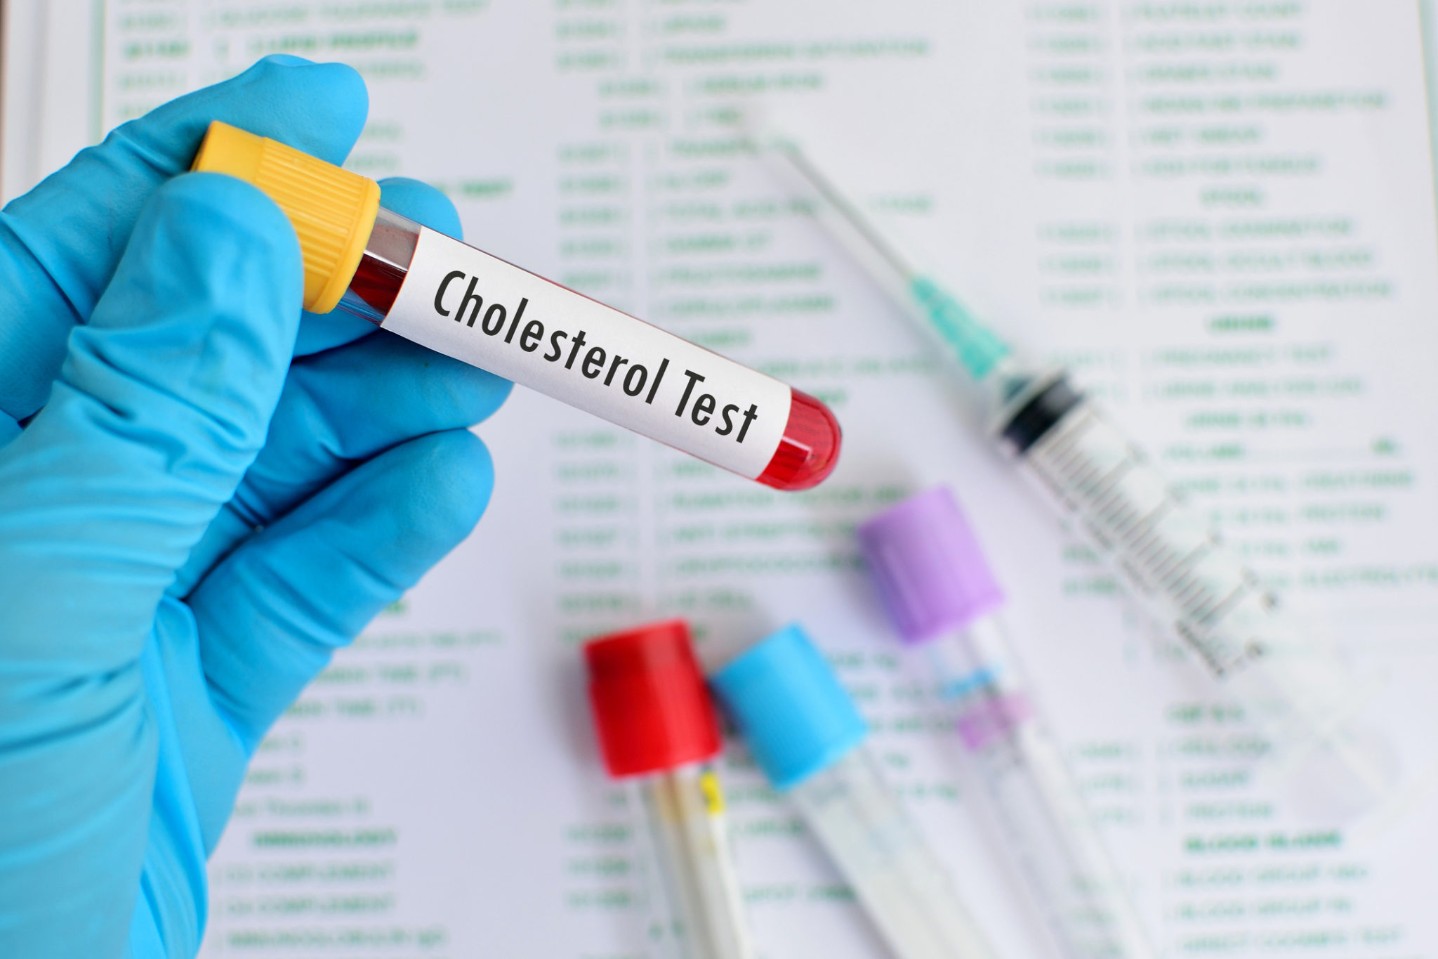 Cholesterol testing